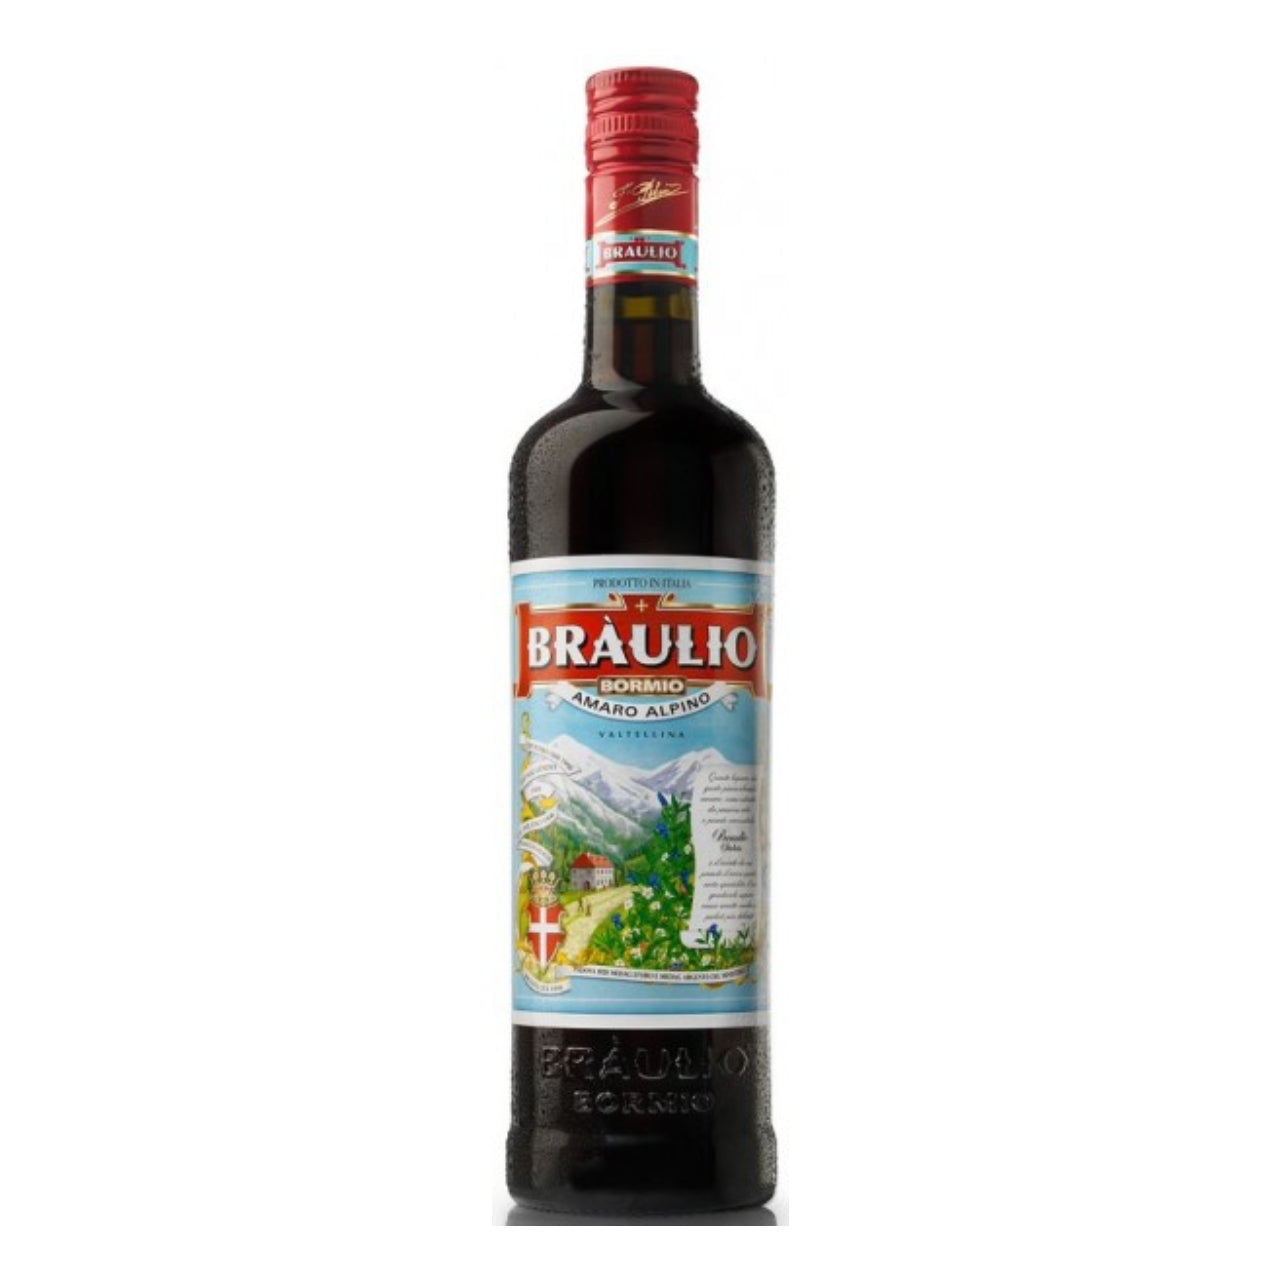 Braulio Amaro Alpino - Aperitvo/Digestivo Italy - Liquor Wine Cave